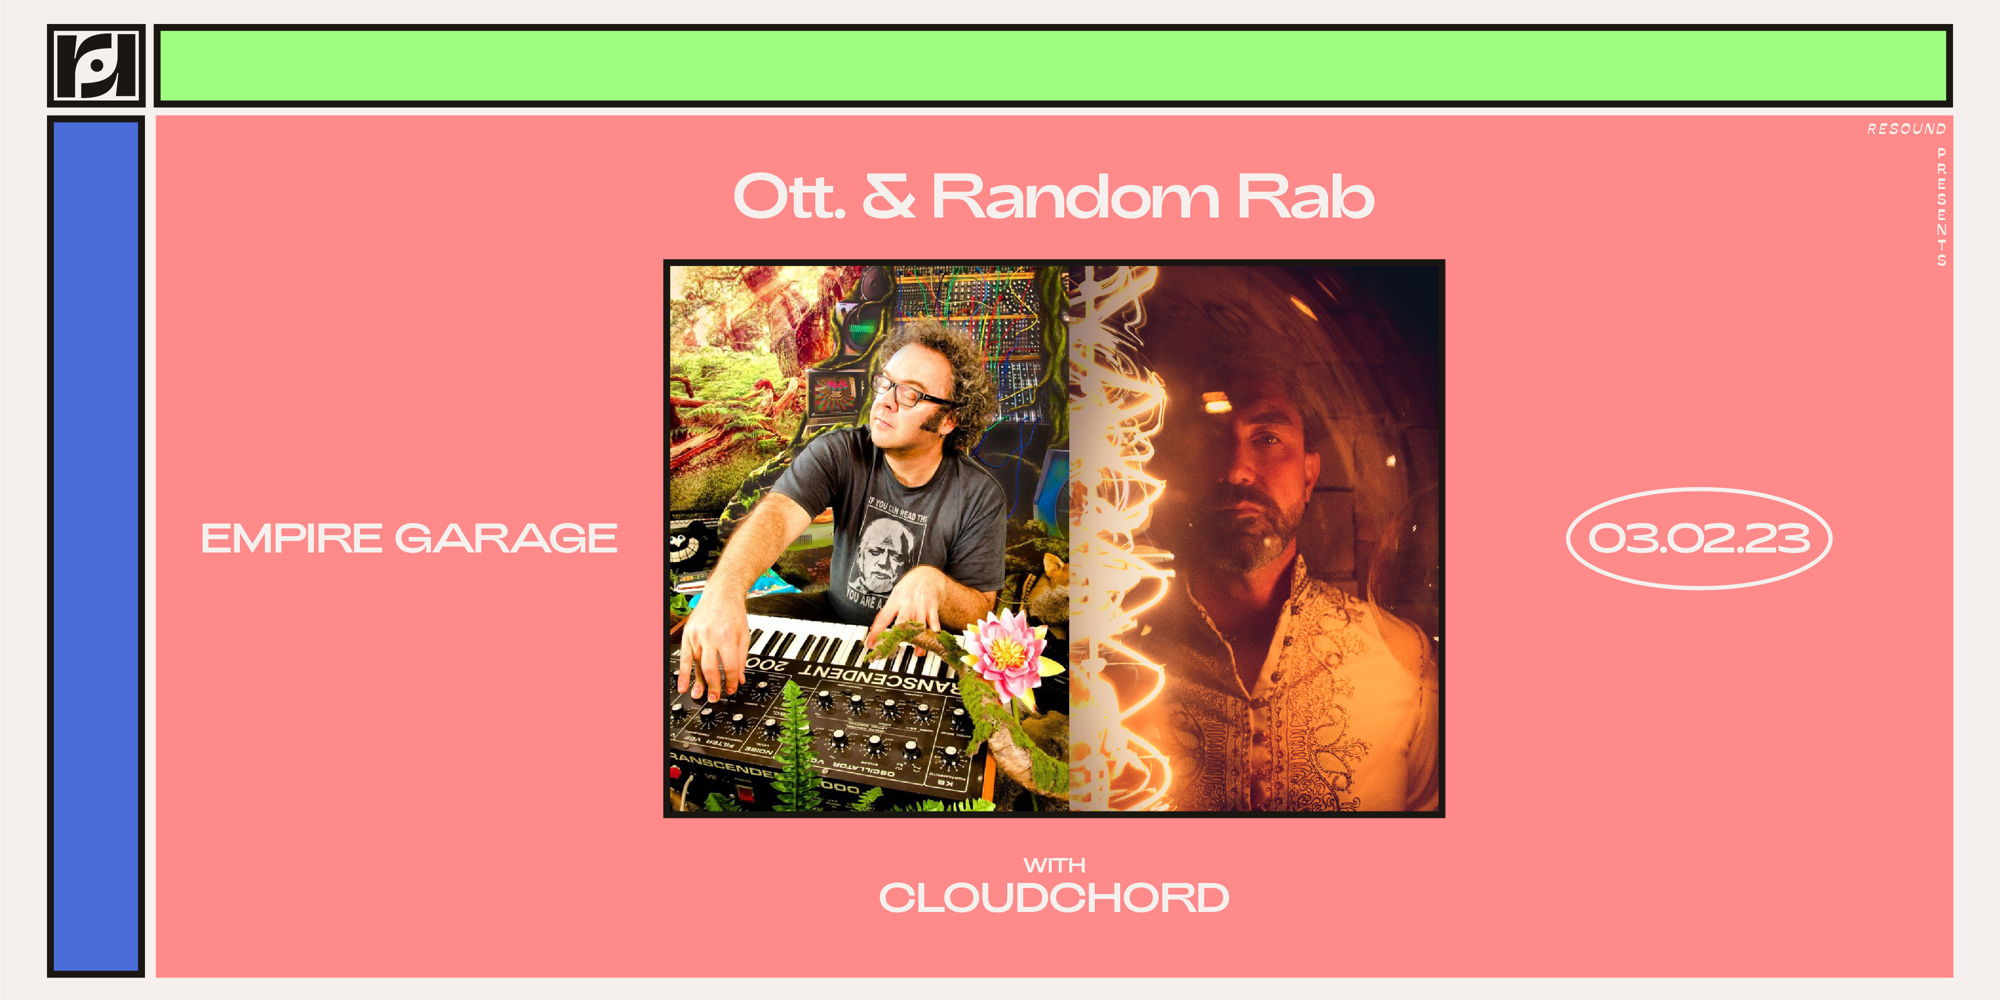 Resound Presents: Ott. and Random Rab at Empire Garage on 3/2/23 promotional image